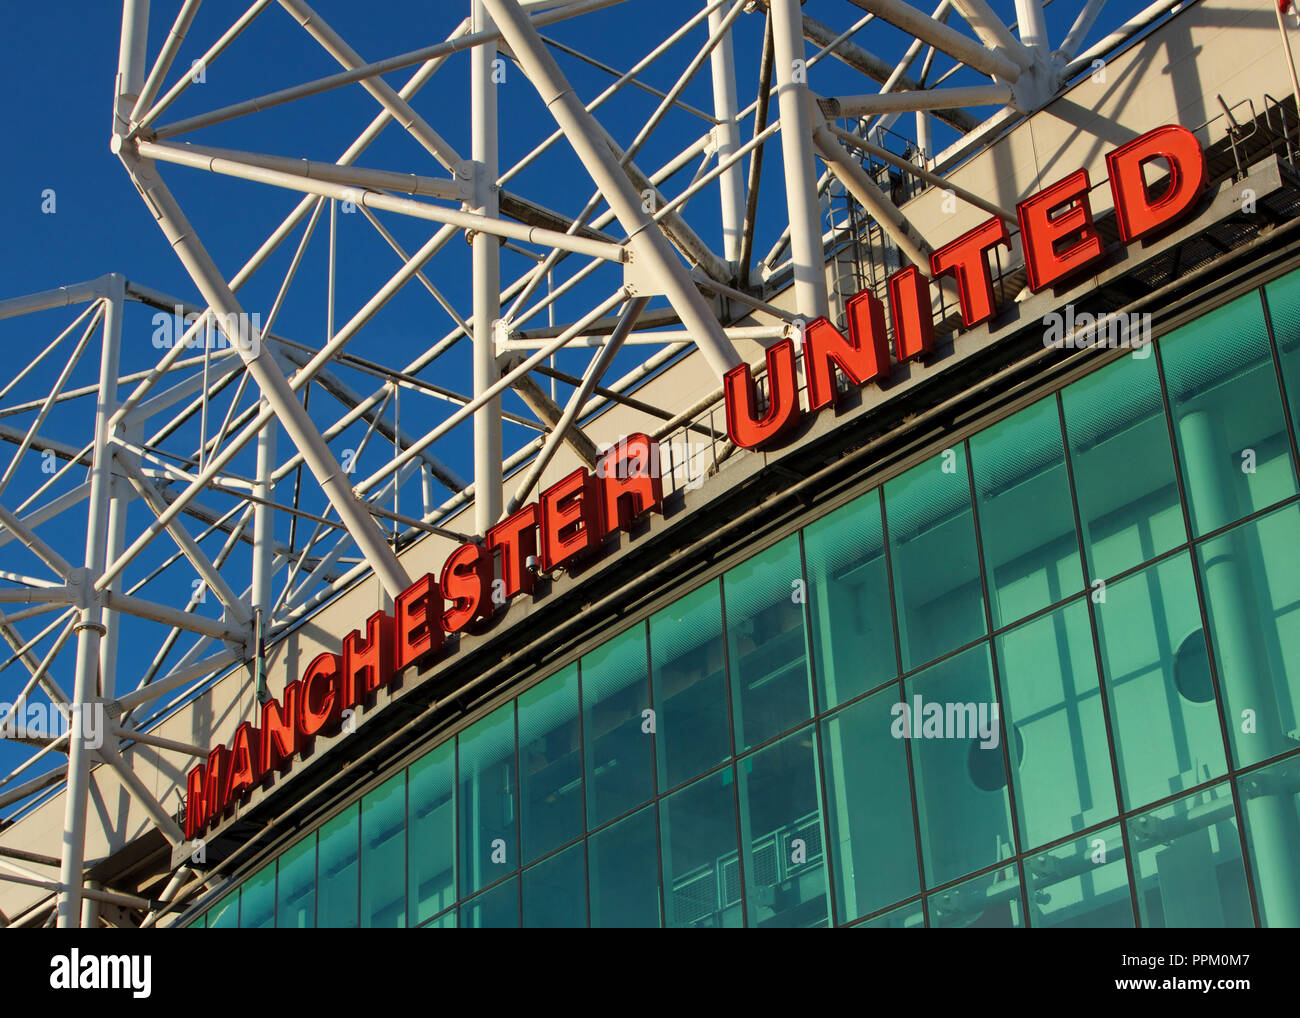 Close-up de el signo del Manchester United en Old Trafford, el estadio del club. Foto de stock